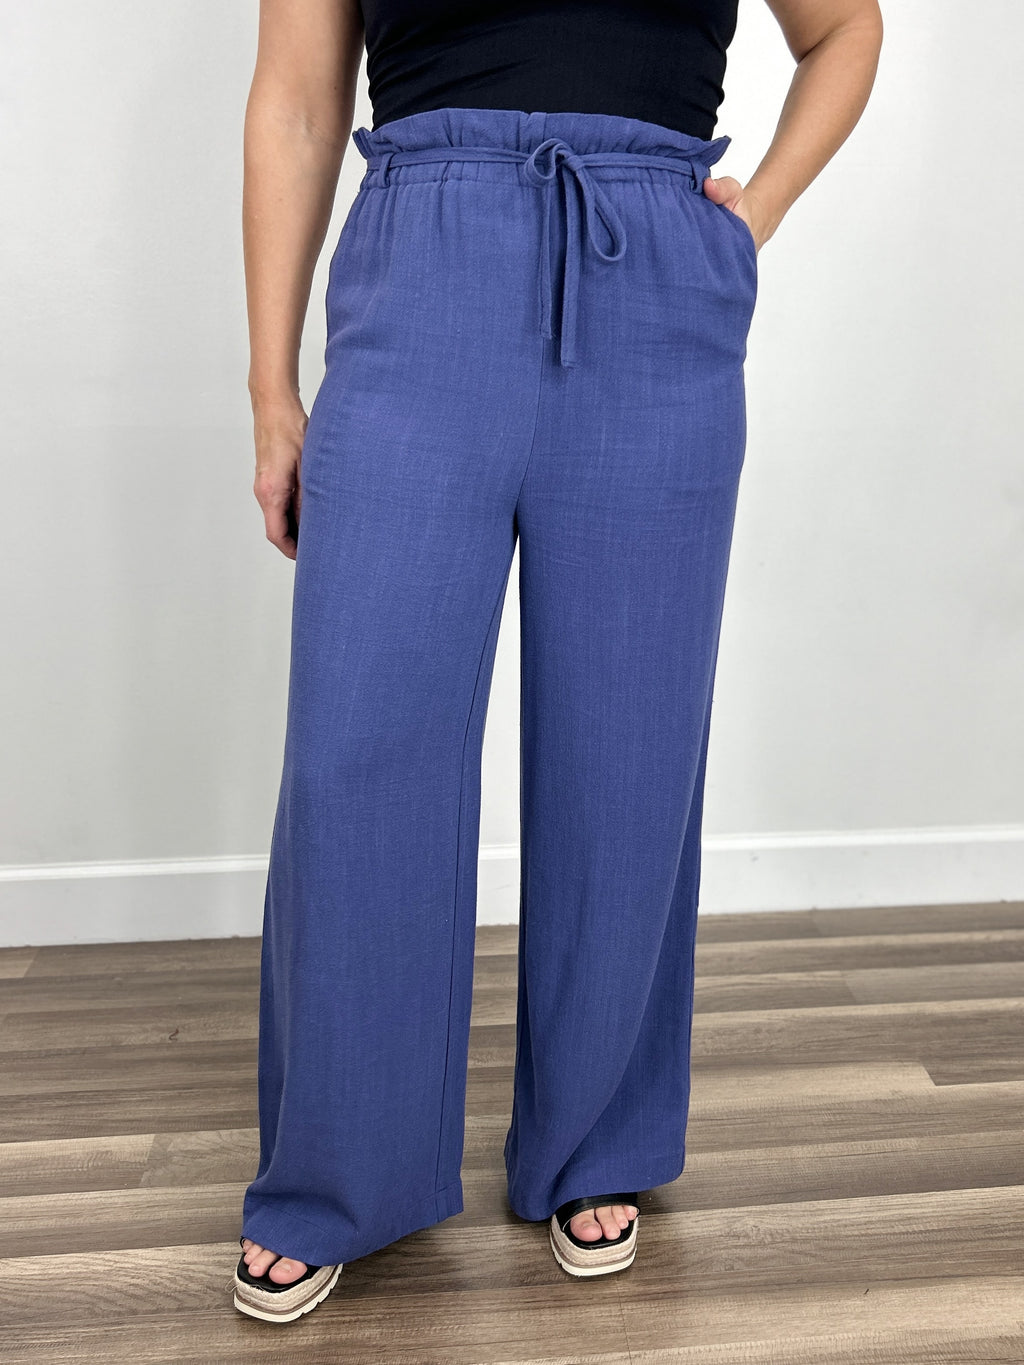 Women's blue linen blend wide leg pant with adjustable waist tie.